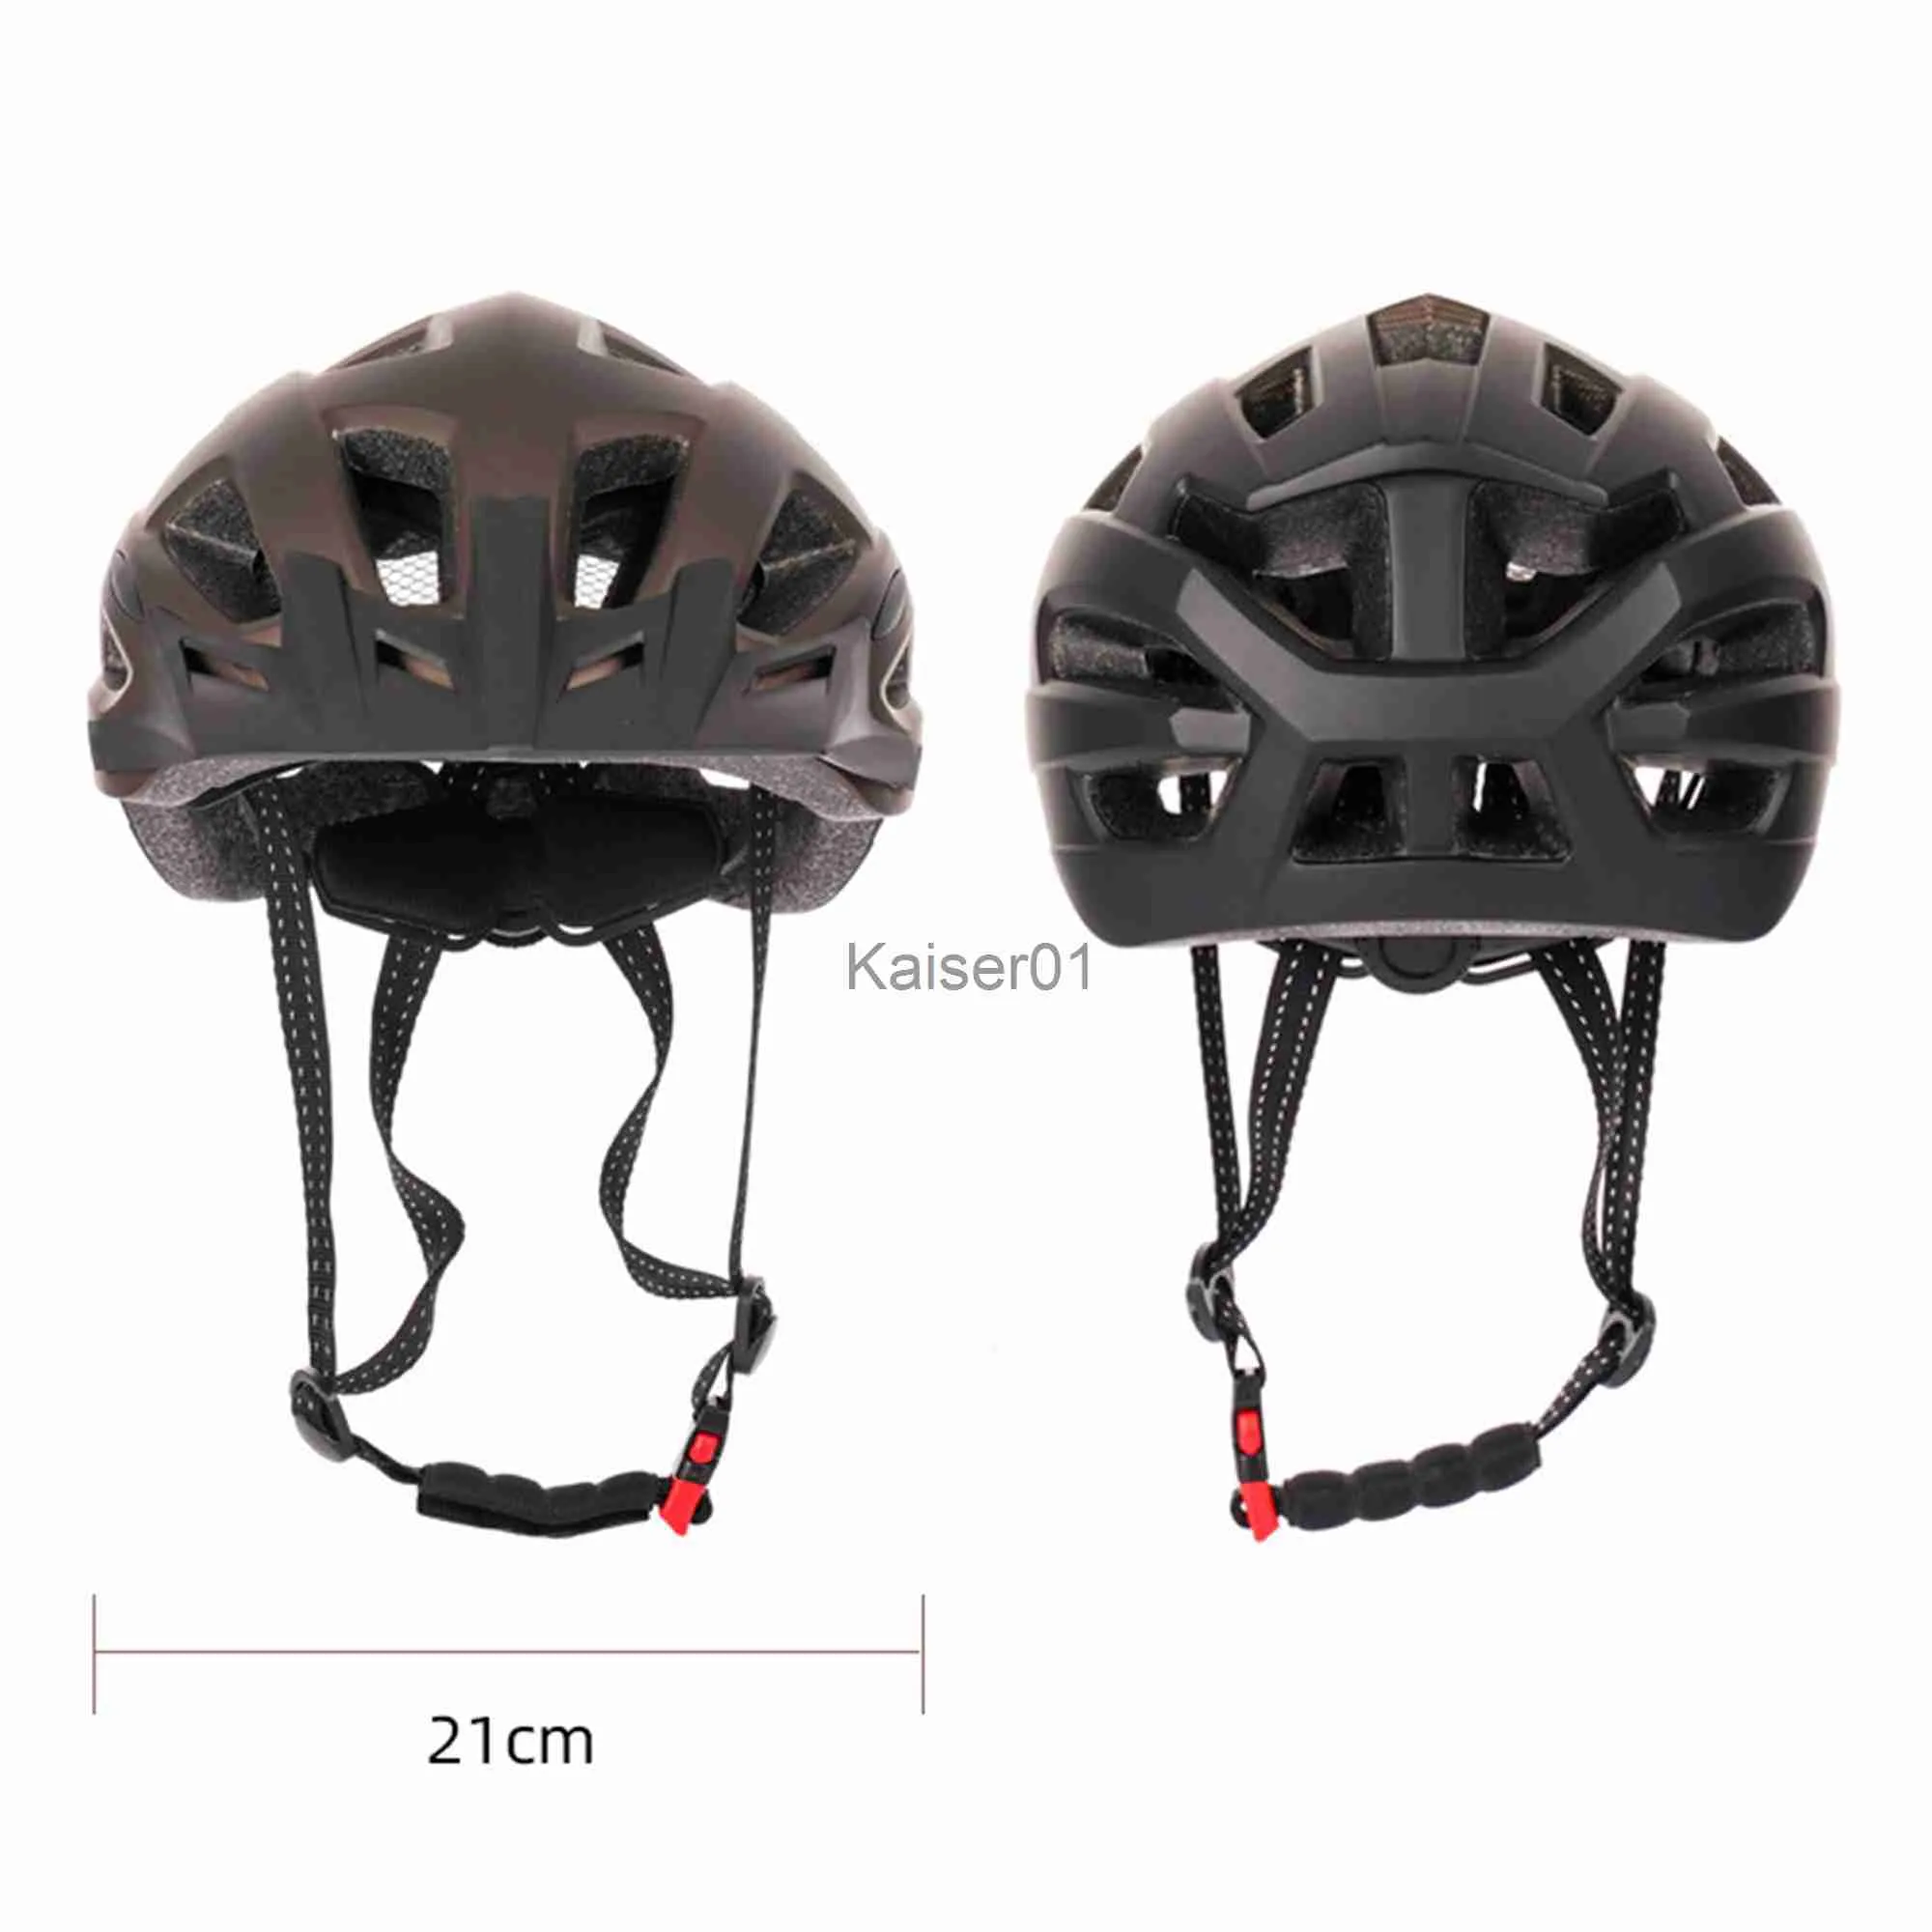 Professional Ultralight Bike Helmets Kmart For Road And Mountain Biking  Ventilated, All Terrain Sports Helmet X0818 From Kaiser01, $15.47